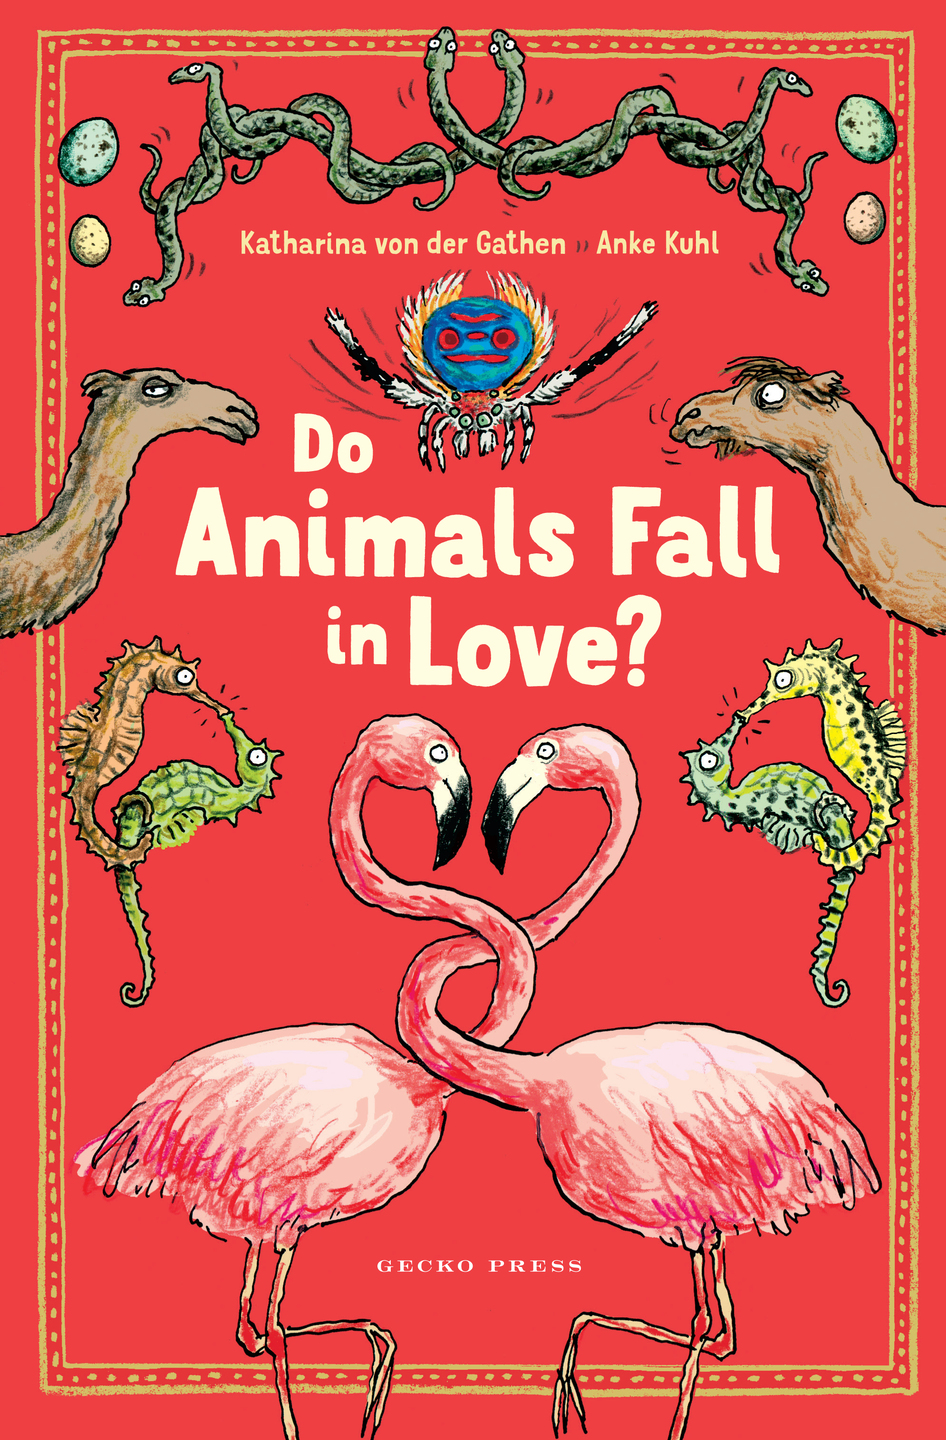 Do Animals Fall in Love? | Gecko Press